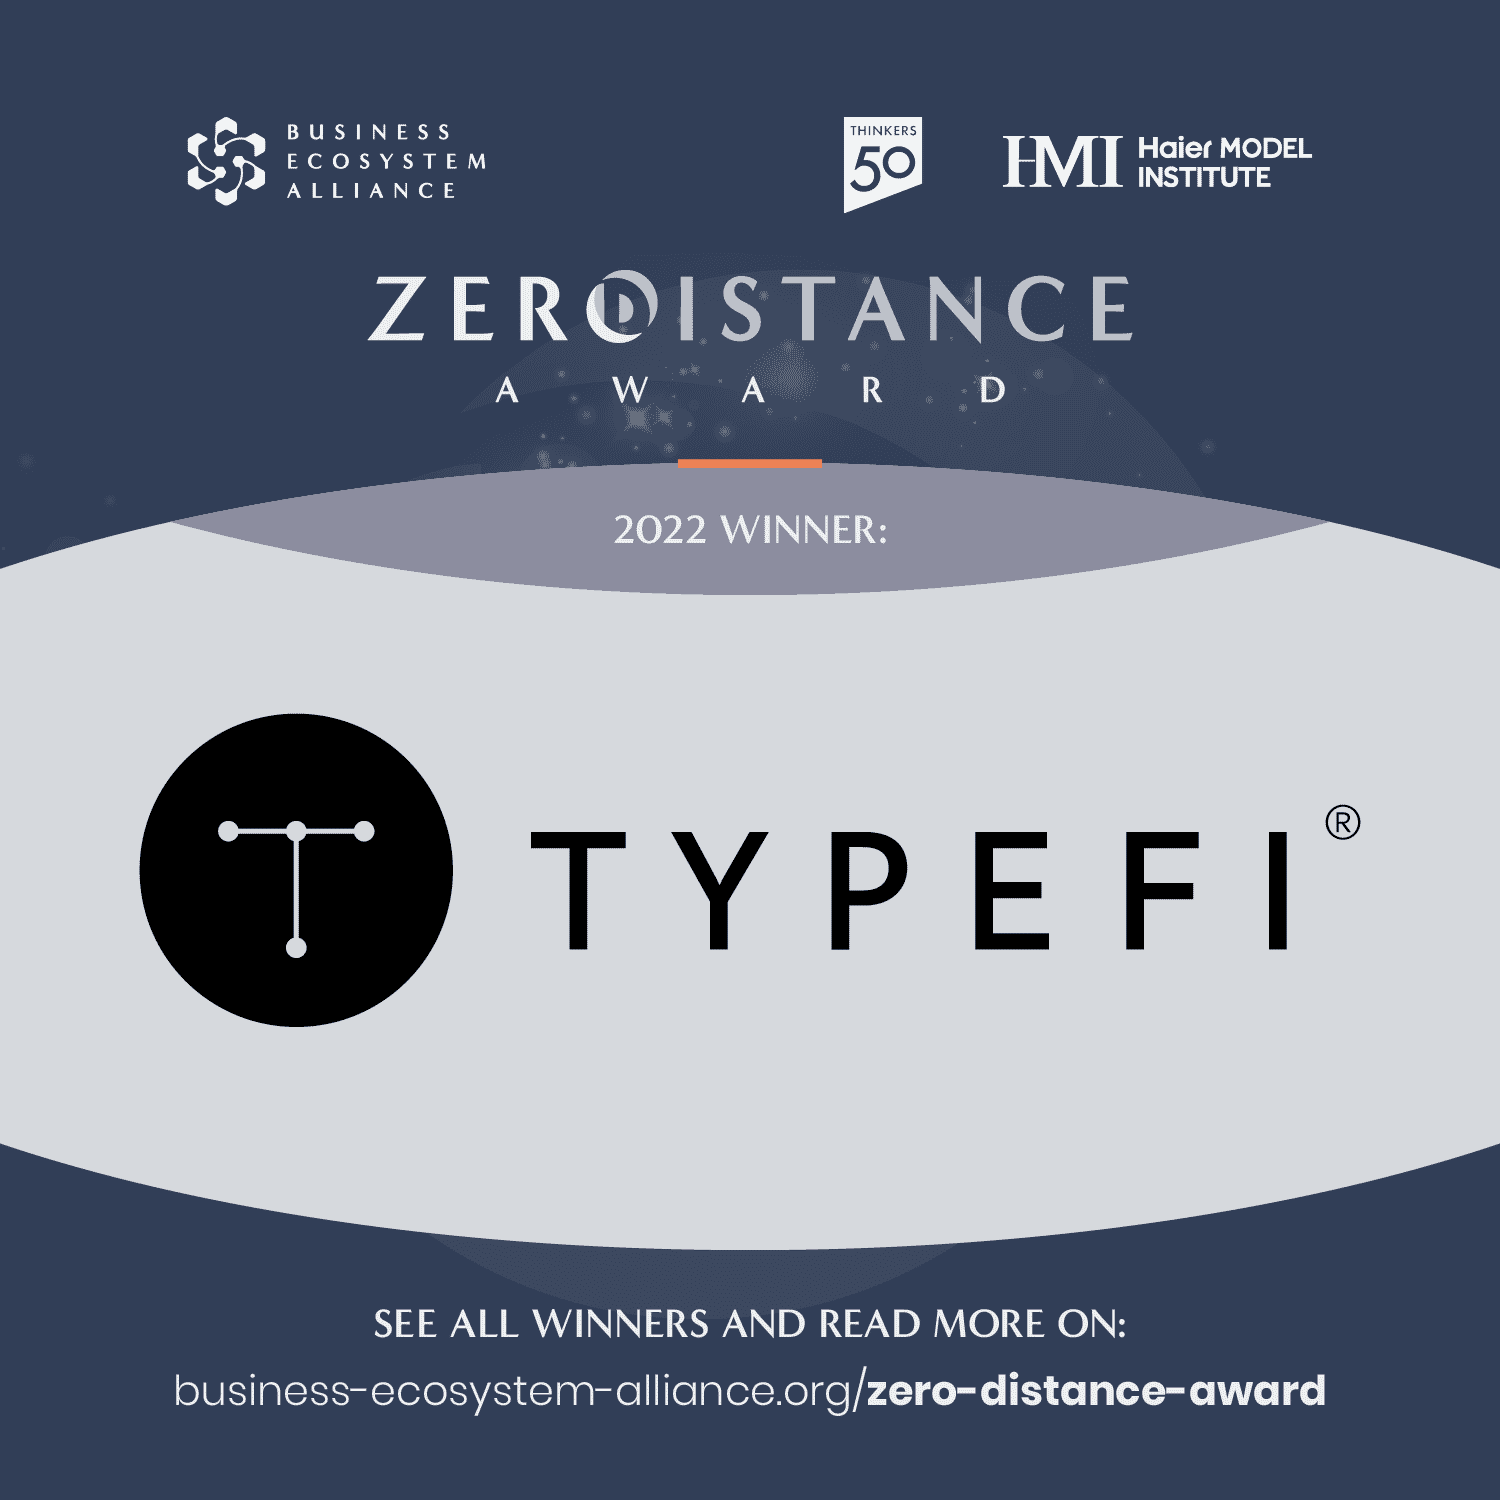 Typefi wins Zero Distance award from Business Ecosystem Alliance